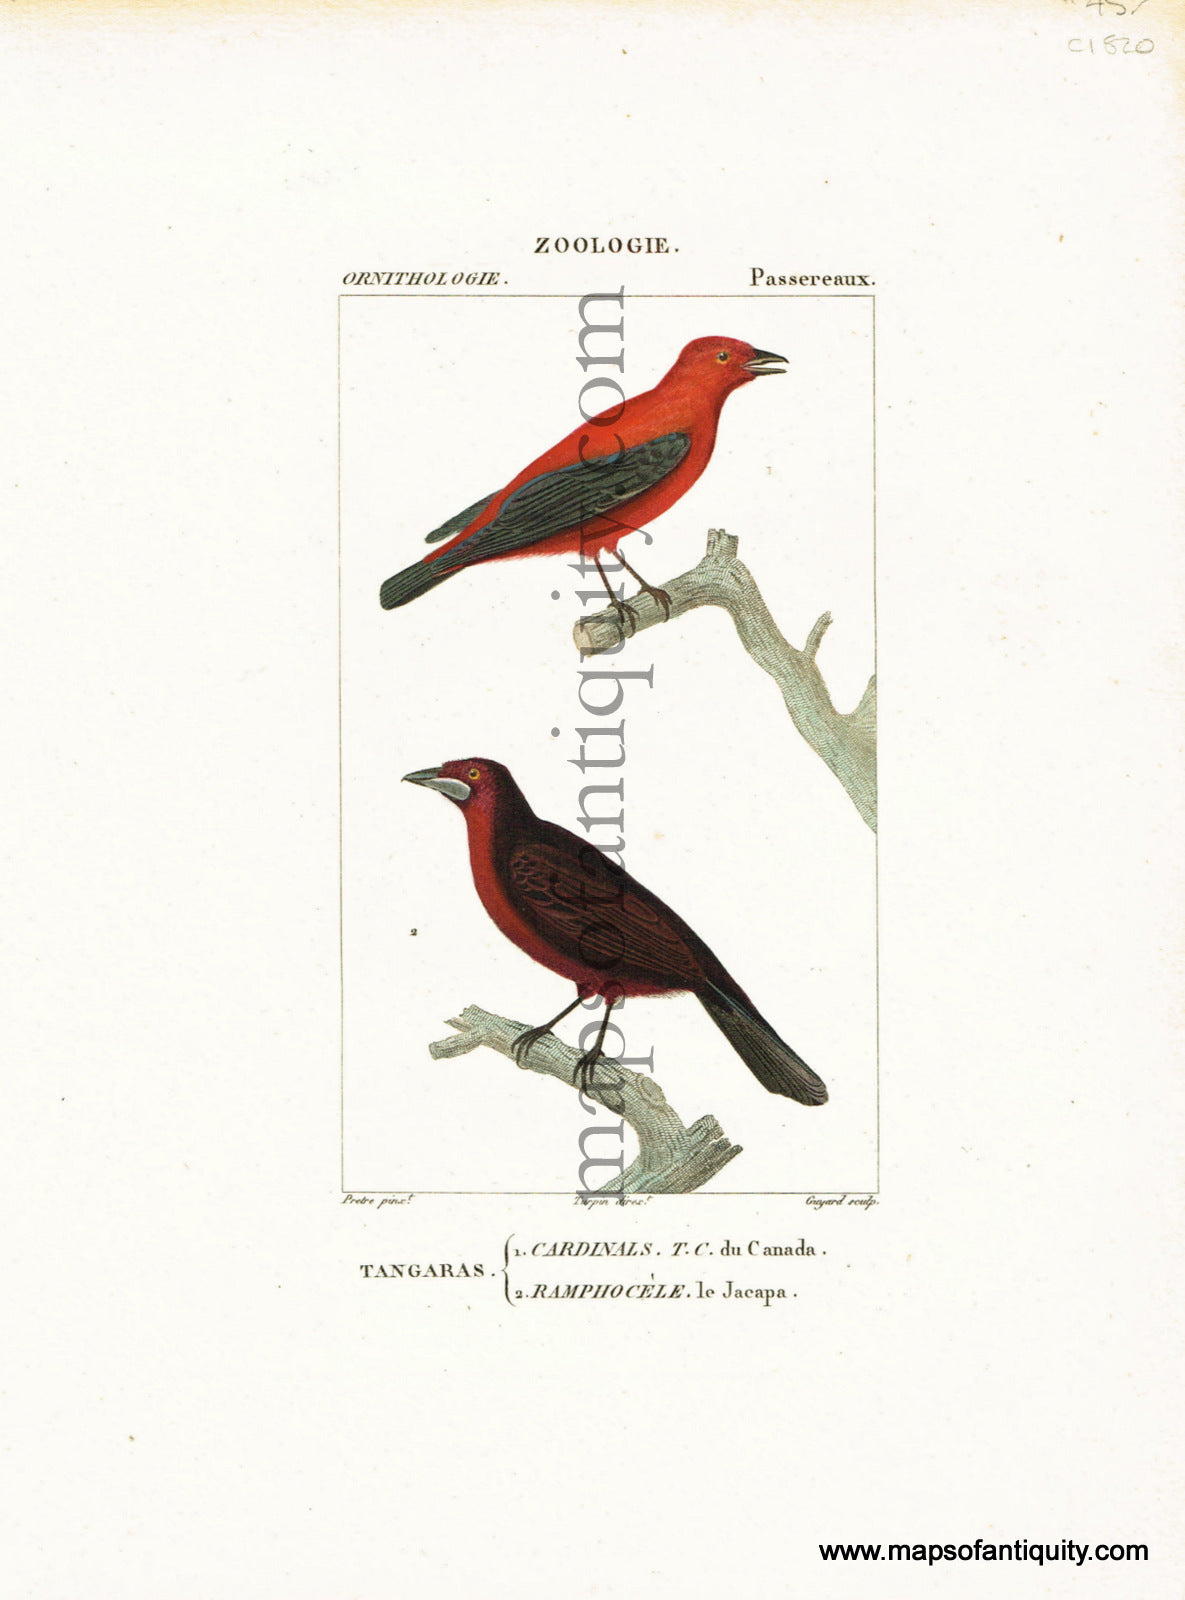 Antique-Hand-Colored-Engraved-Illustration-Tangaras-(Cardinals-&-Ramphocele)-Antique-Prints-Natural-History-Birds-c.-1820-Turpin-Maps-Of-Antiquity